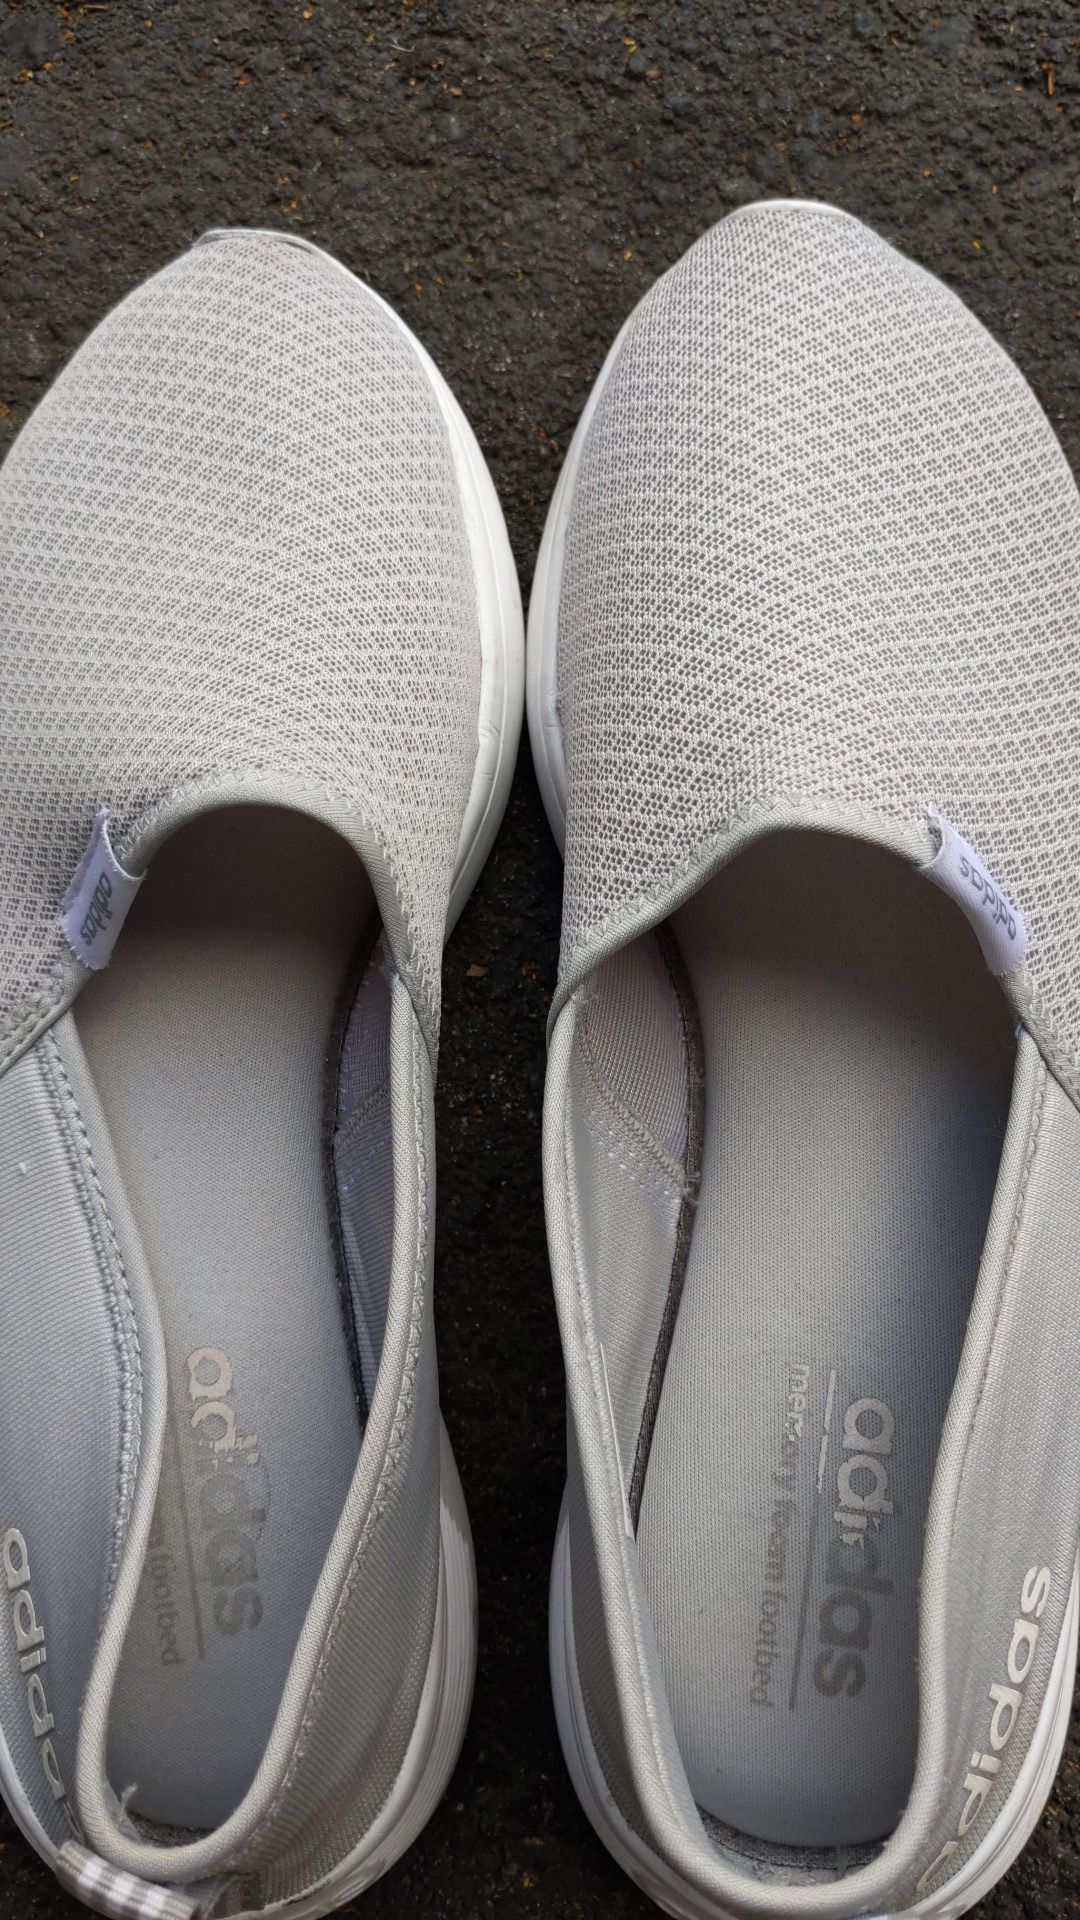 Adidas memory foam shoes size 10